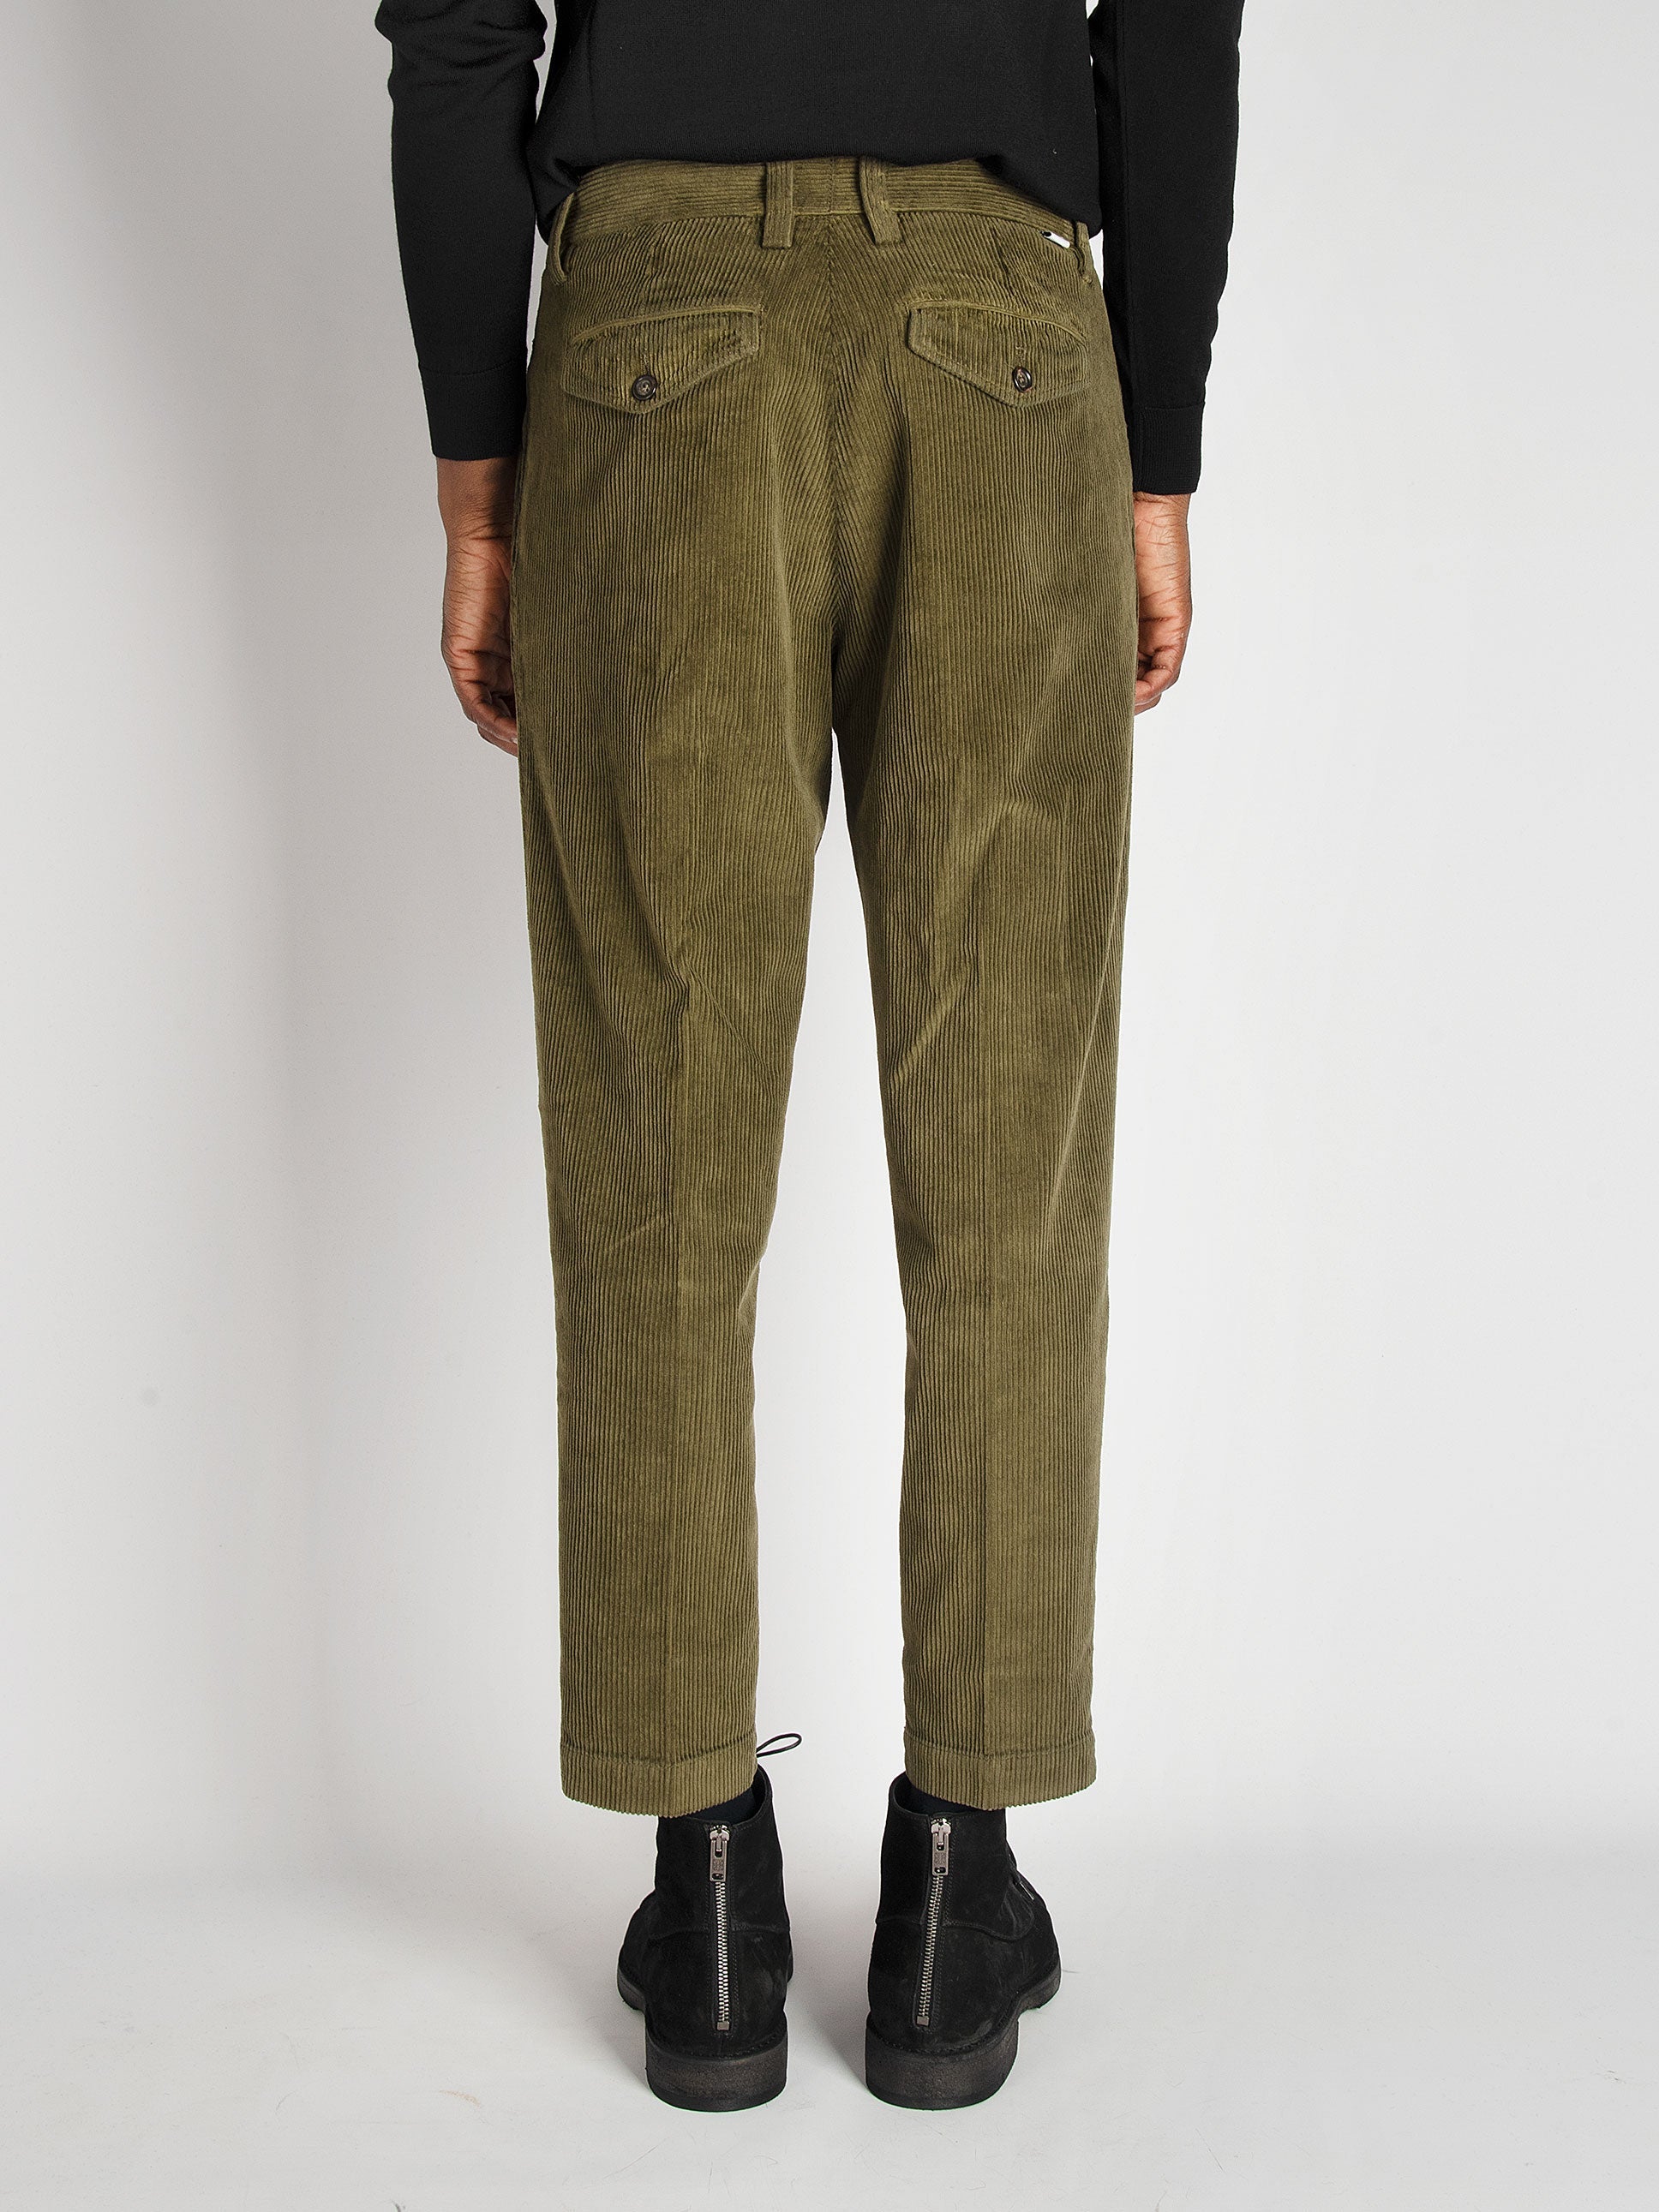 Pantalone Velluto Pences - Verde Militare